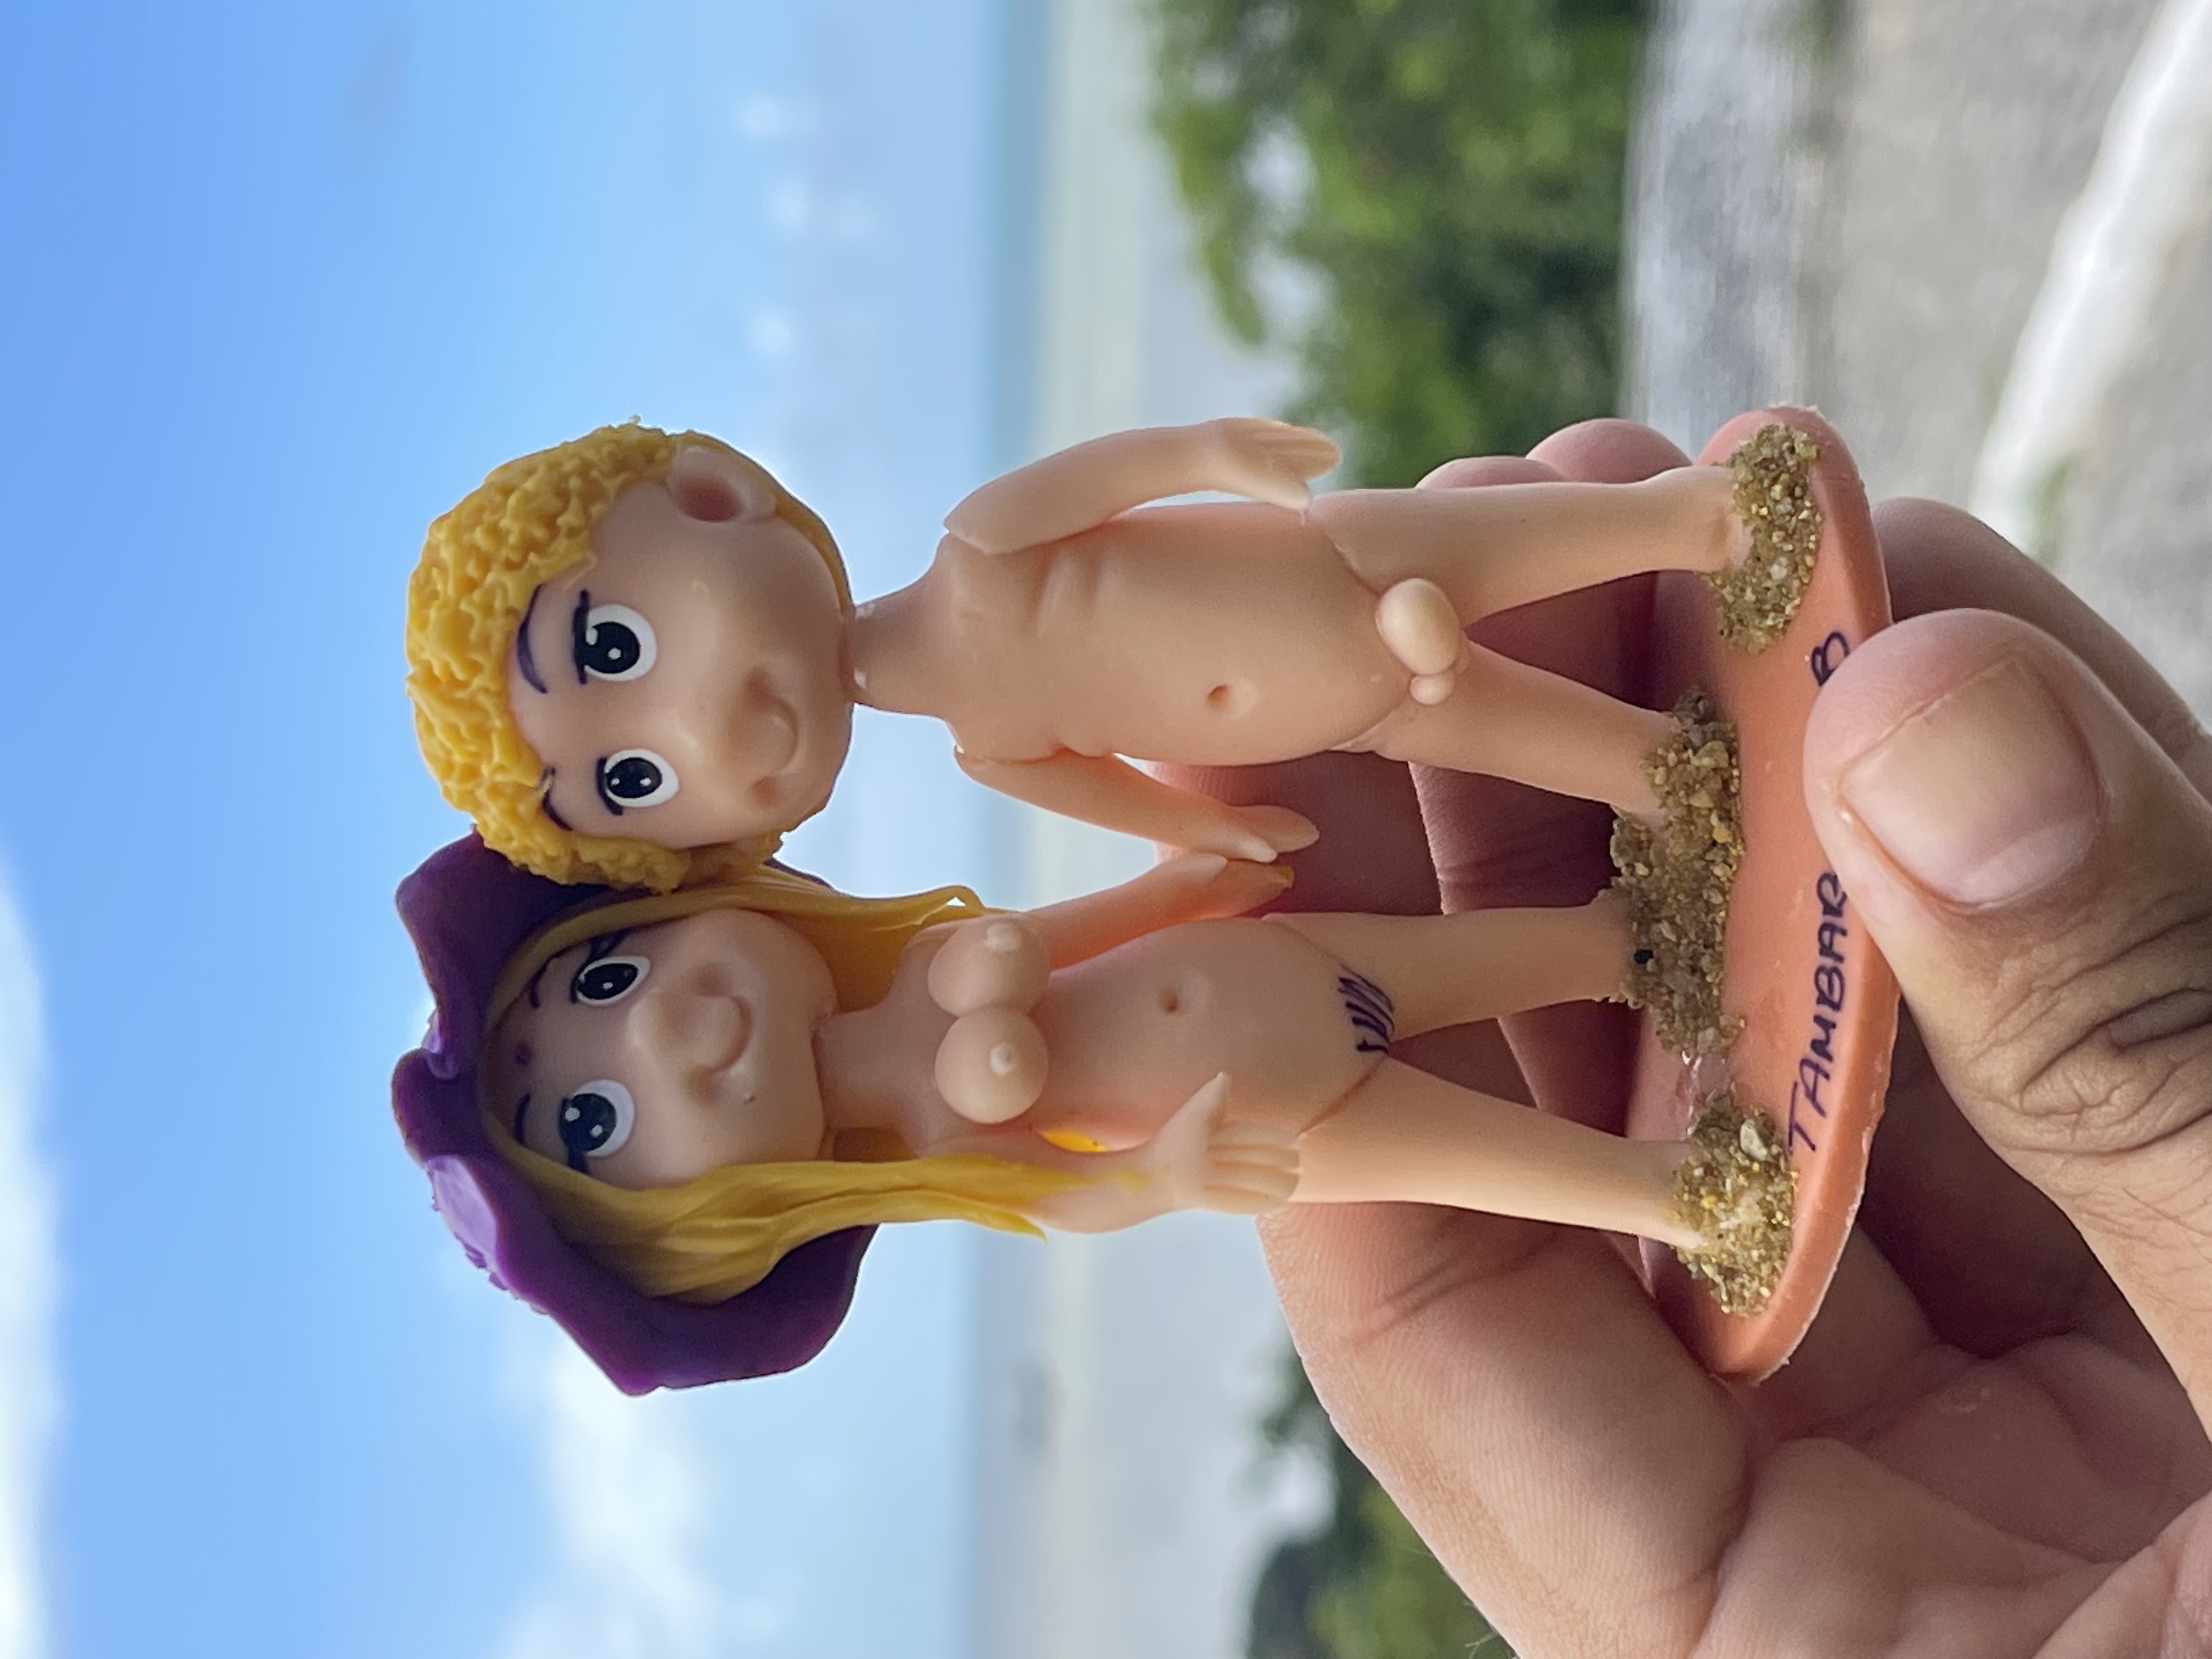 Os aventureiros Vitor Vianna e Franklin David se divertem com o souvenir na praia nudista de Tambaba, na Paraíba